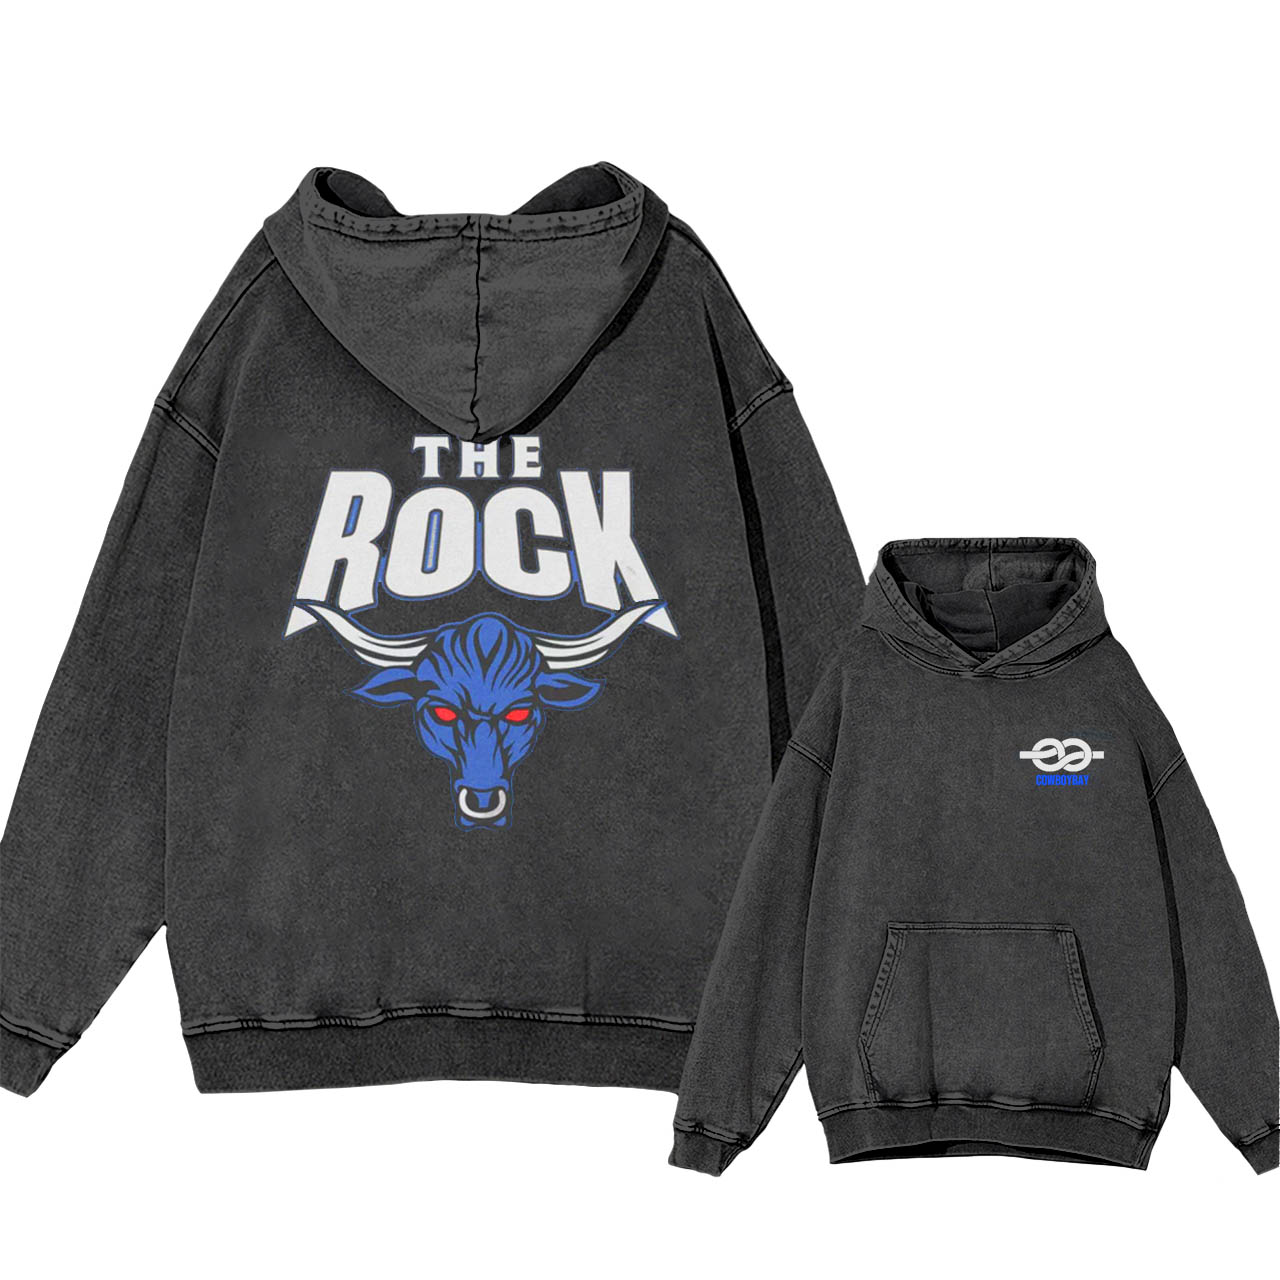 The Rock Bull Cowboybay Garment-Dye Hoodies